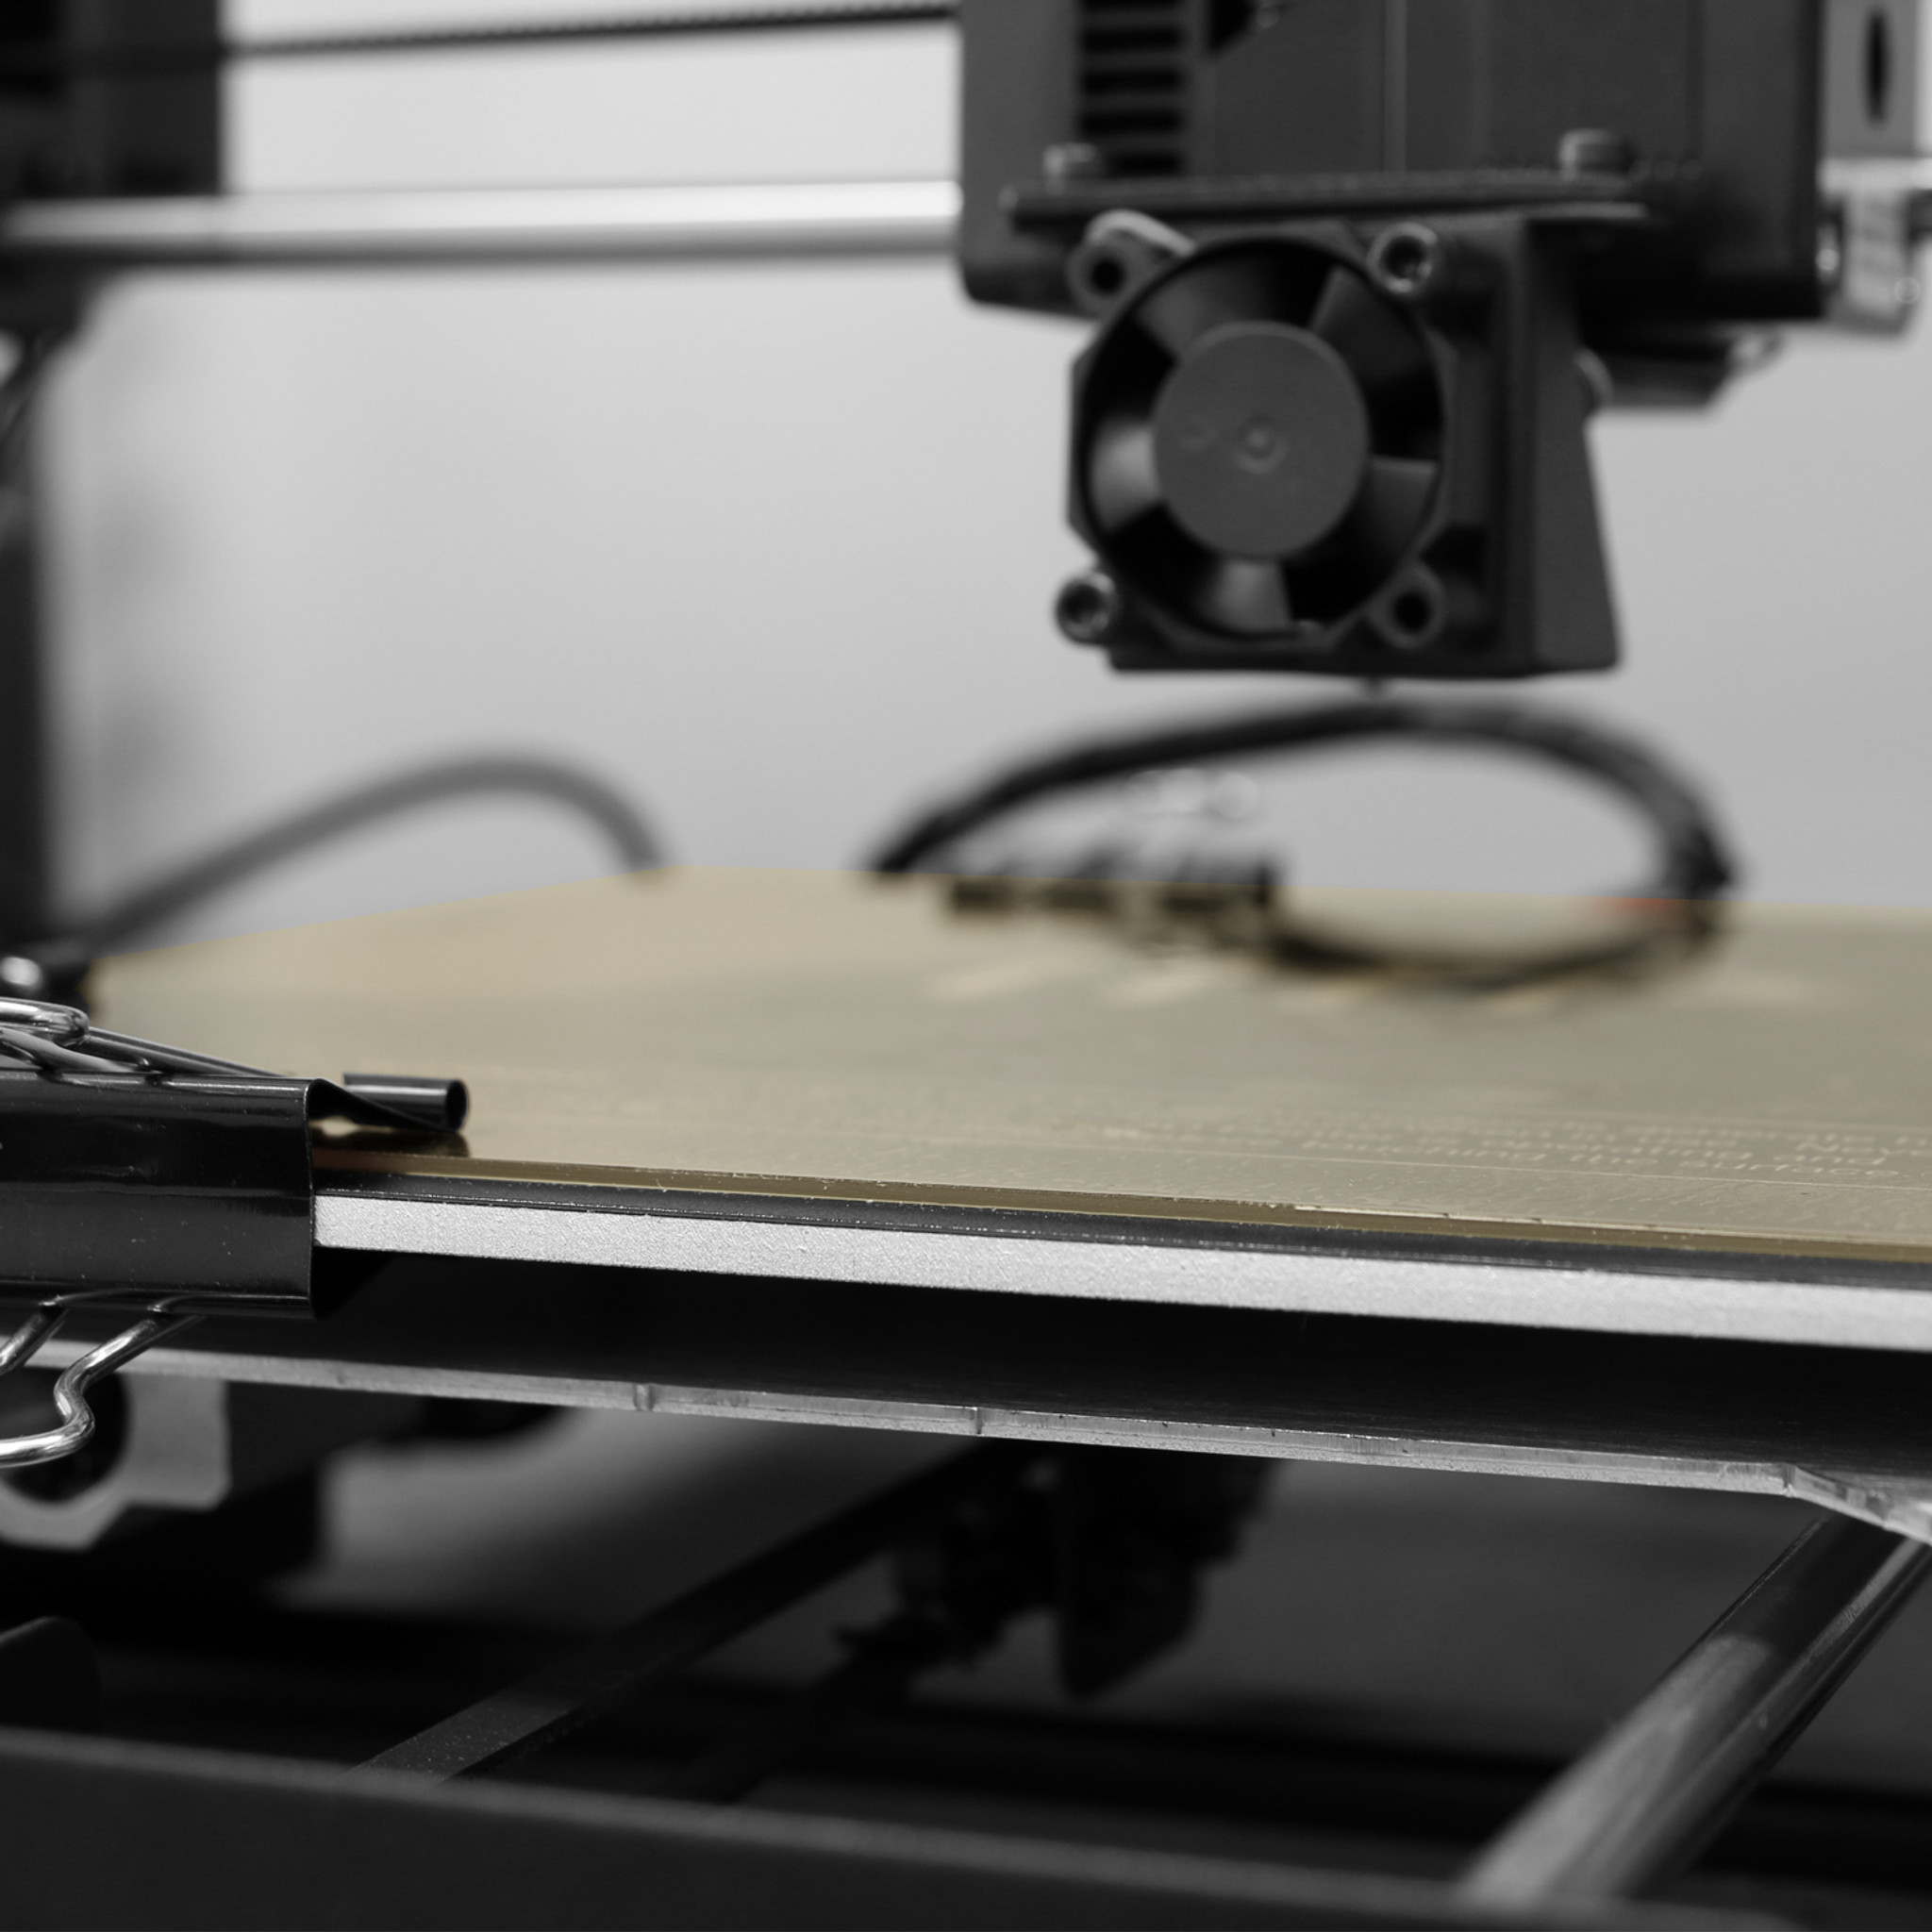 PEI Sheet (1mm) 3D Printing Build Surface - Gizmo Dorks